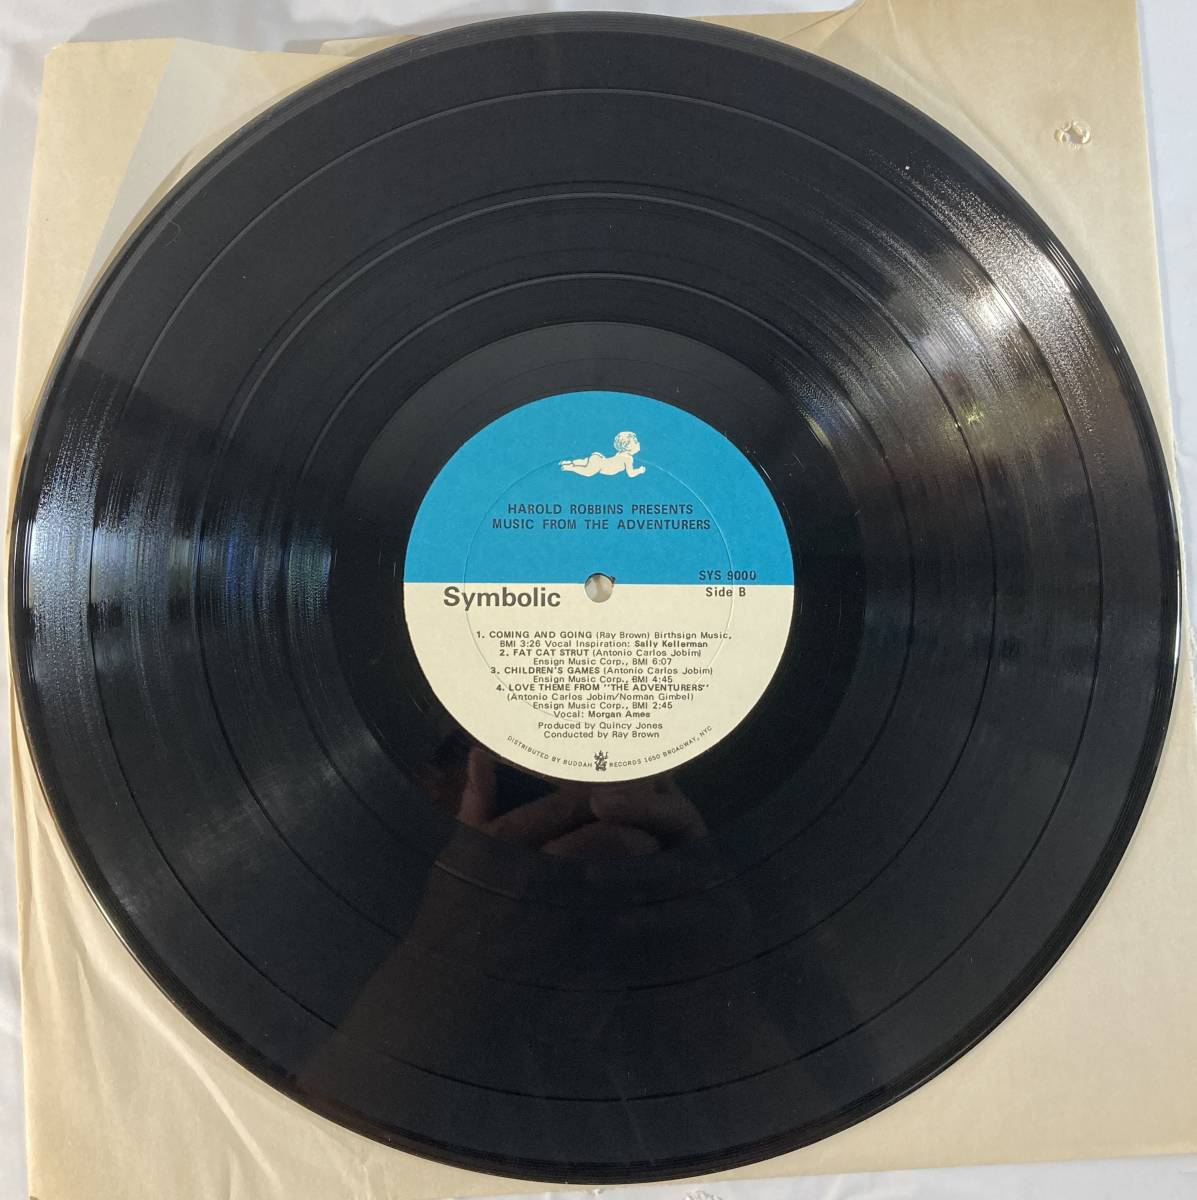 Antonio Carlos Jobim, The Ray Brown Orchestra* Arranged By Quincy Jones 冒険者 (1970) 米盤LP Symbolic SYS 9000 STEREO Cutout_画像5